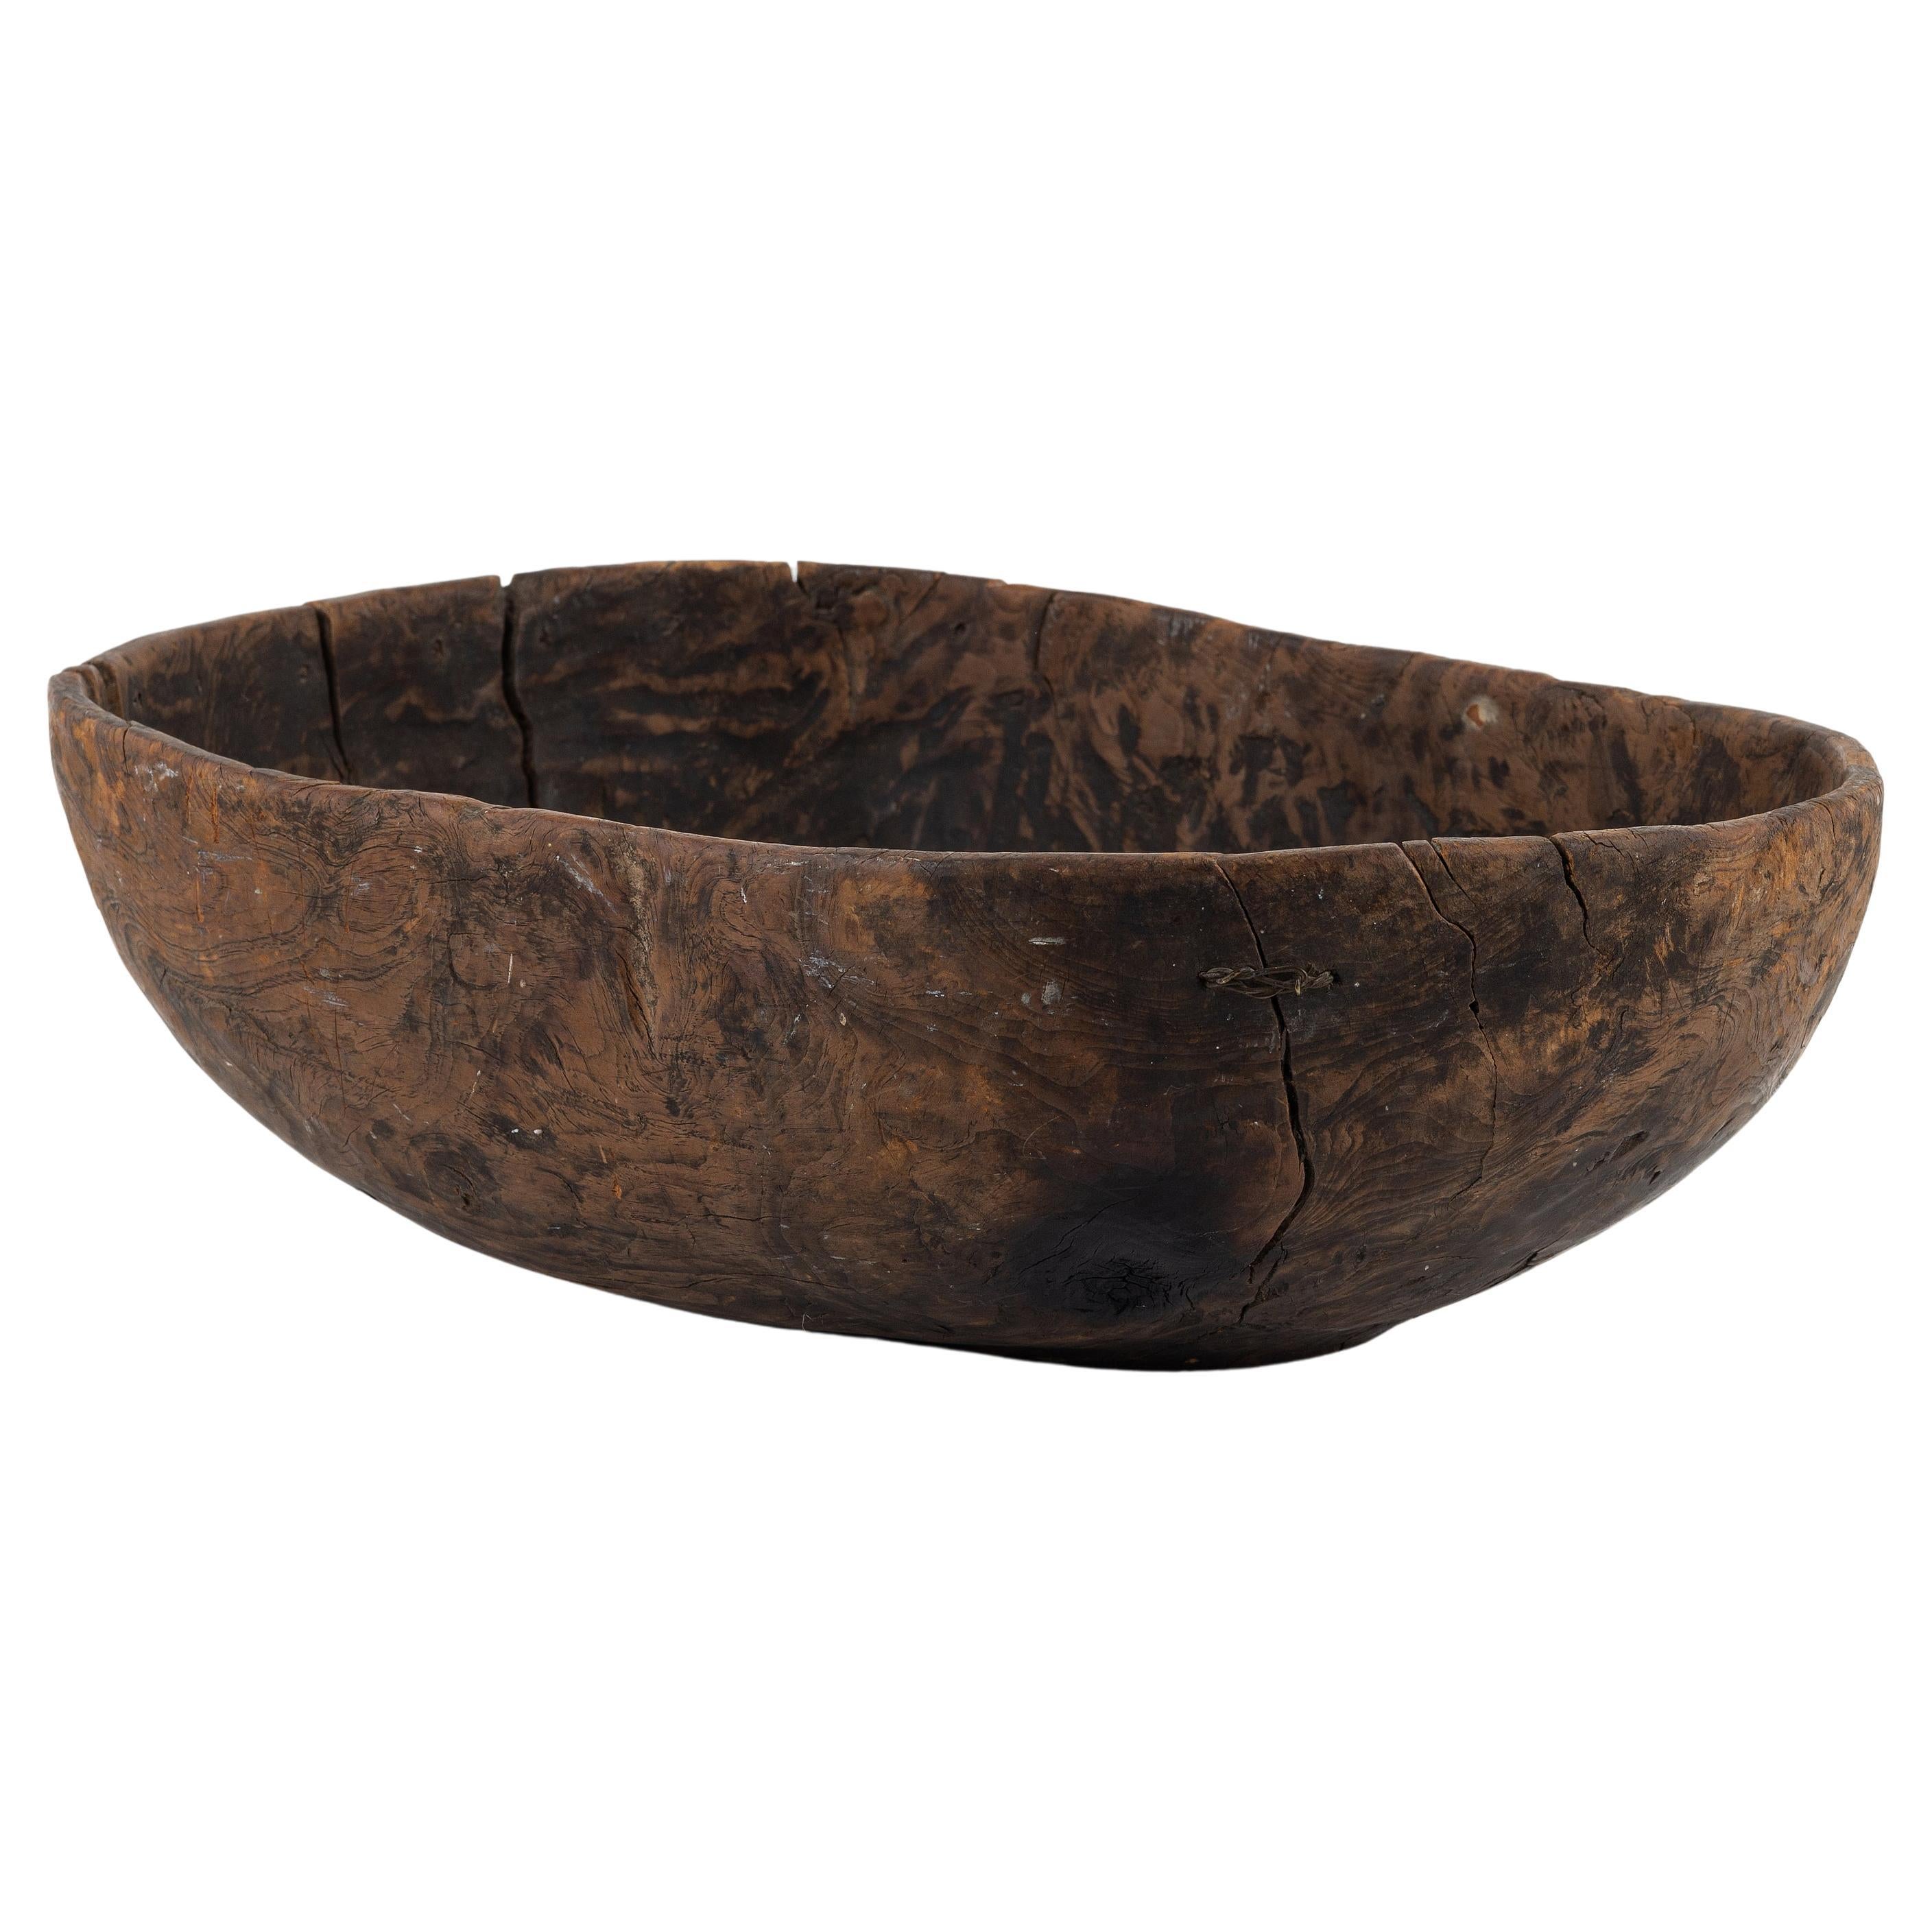 Rare Swedish Wooden Bowl in Birch Wood and Wabi Sabi Style Produced 1793